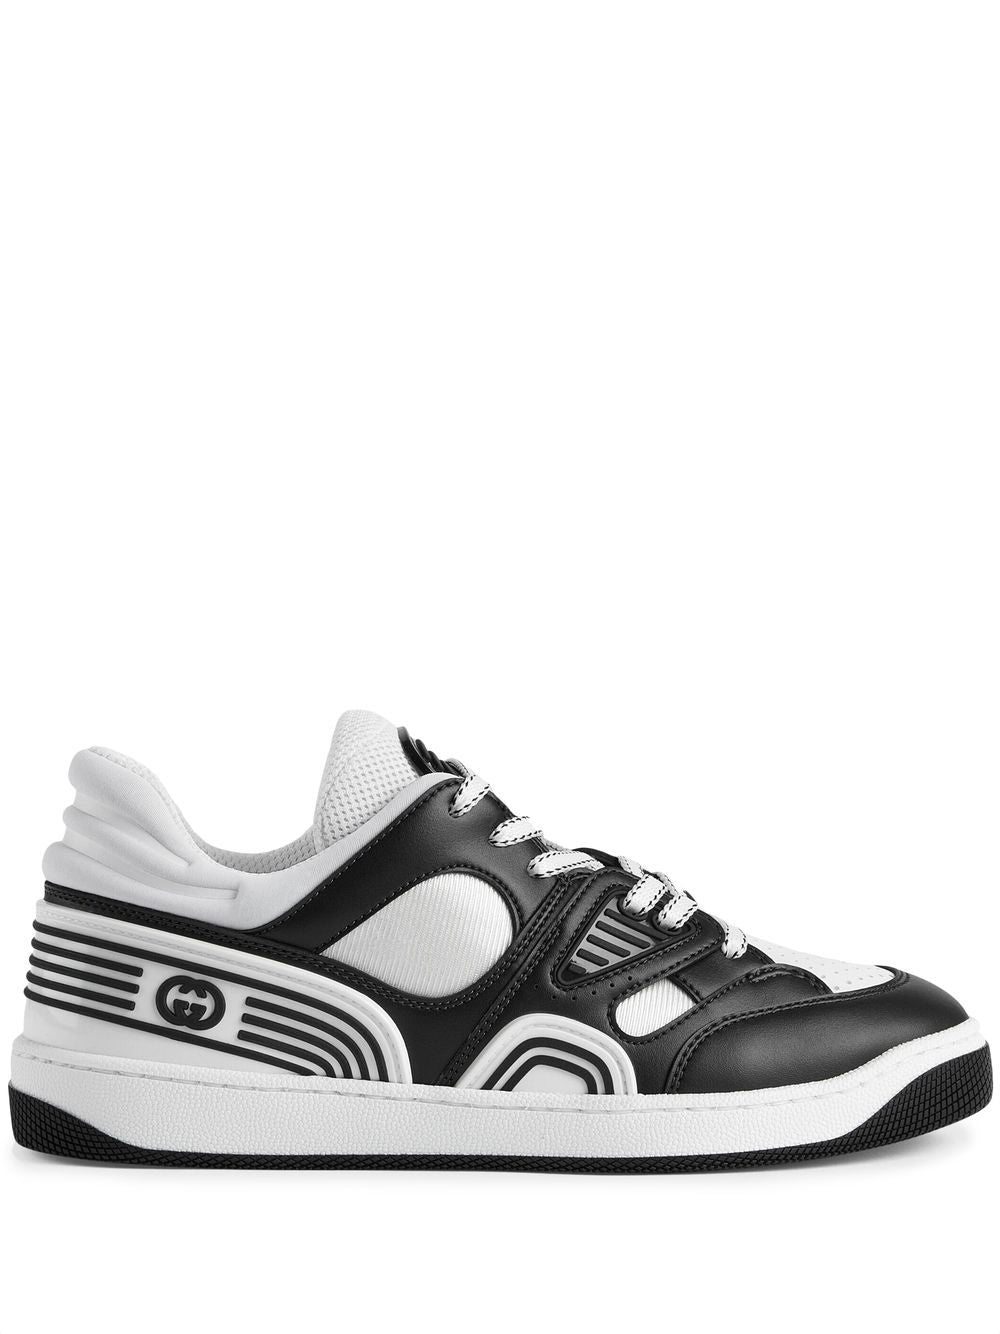 Gucci Basket Low-top Sneakers In Black